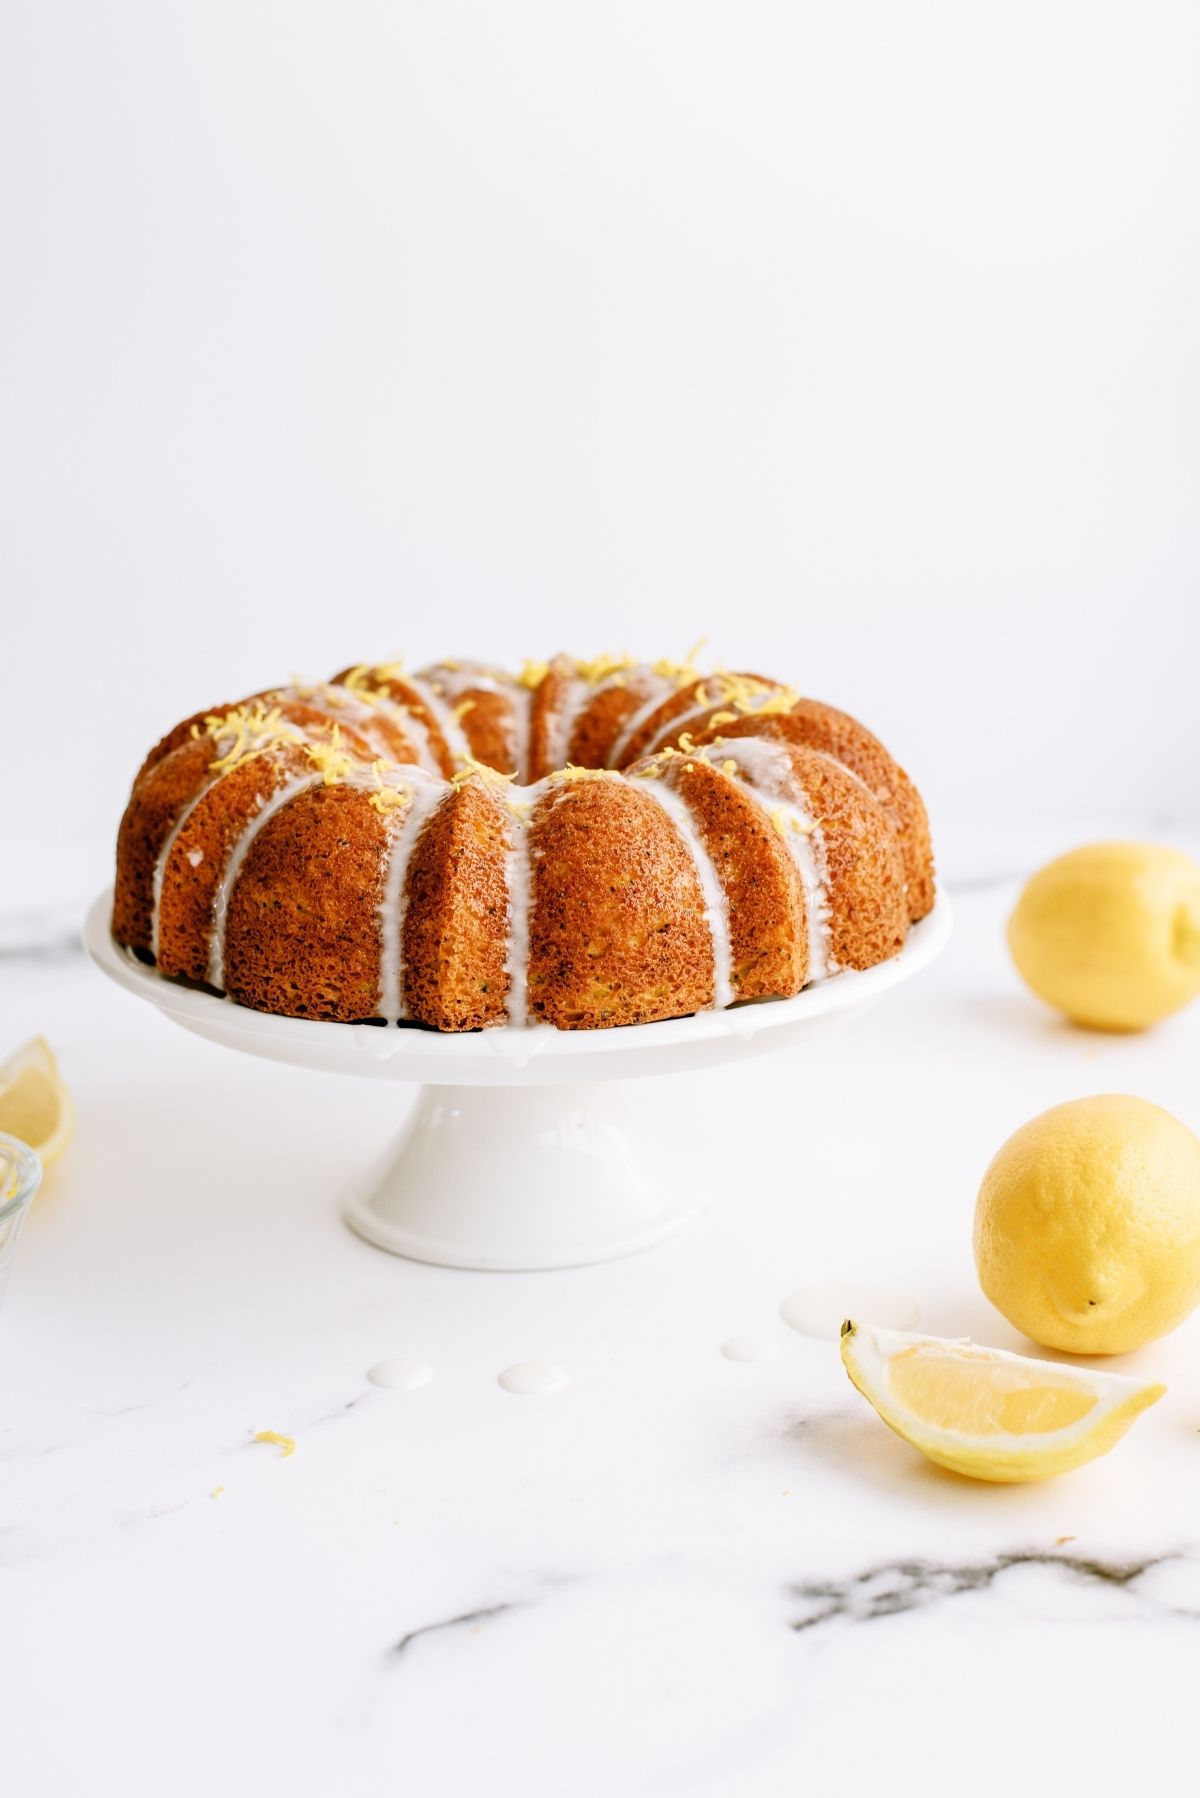 Lemon Poppy Seed Bundt Cake on a cake stand with lemons